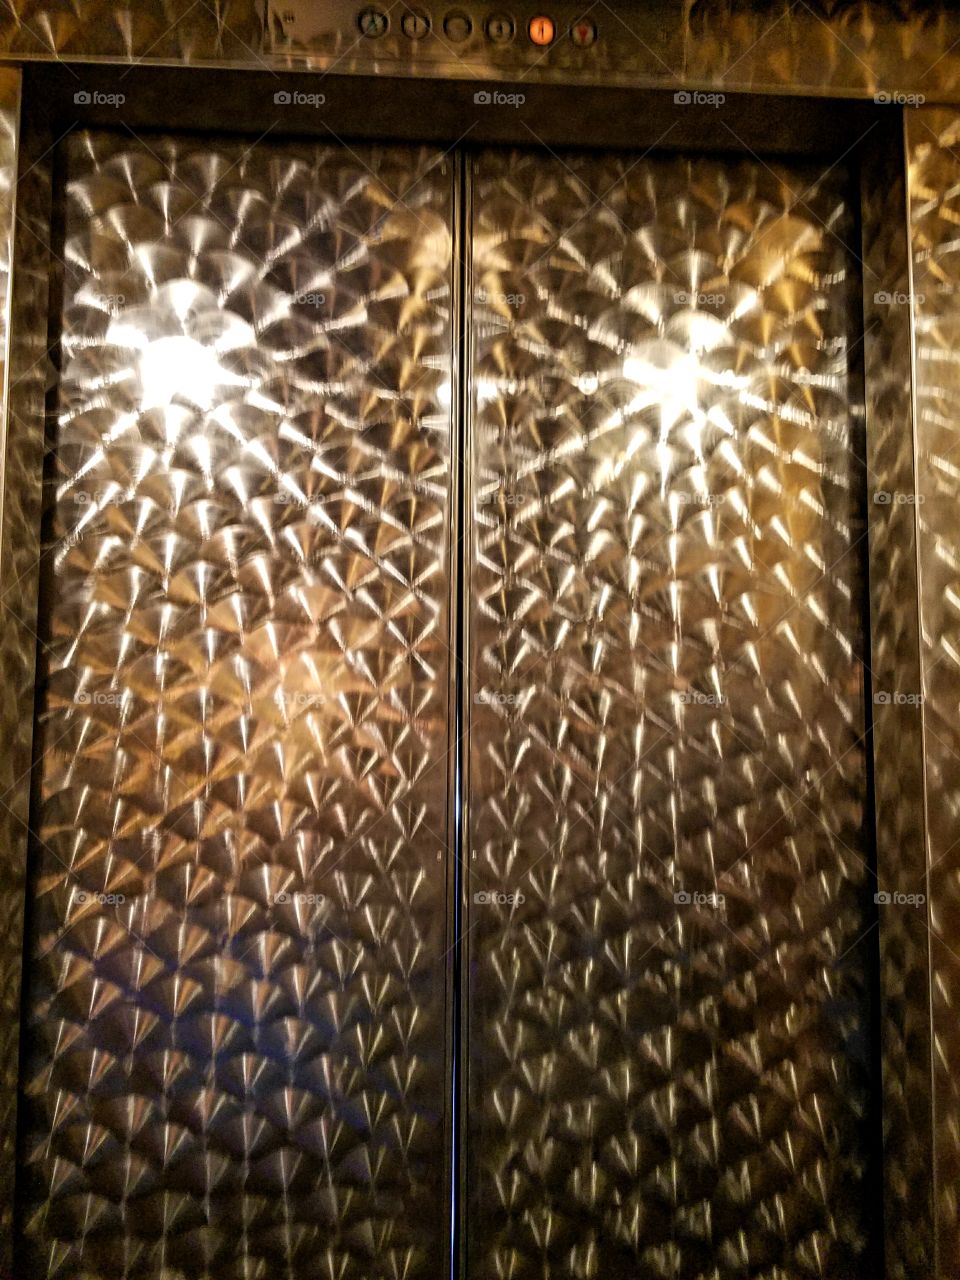 Highly polished metal elevator doors!